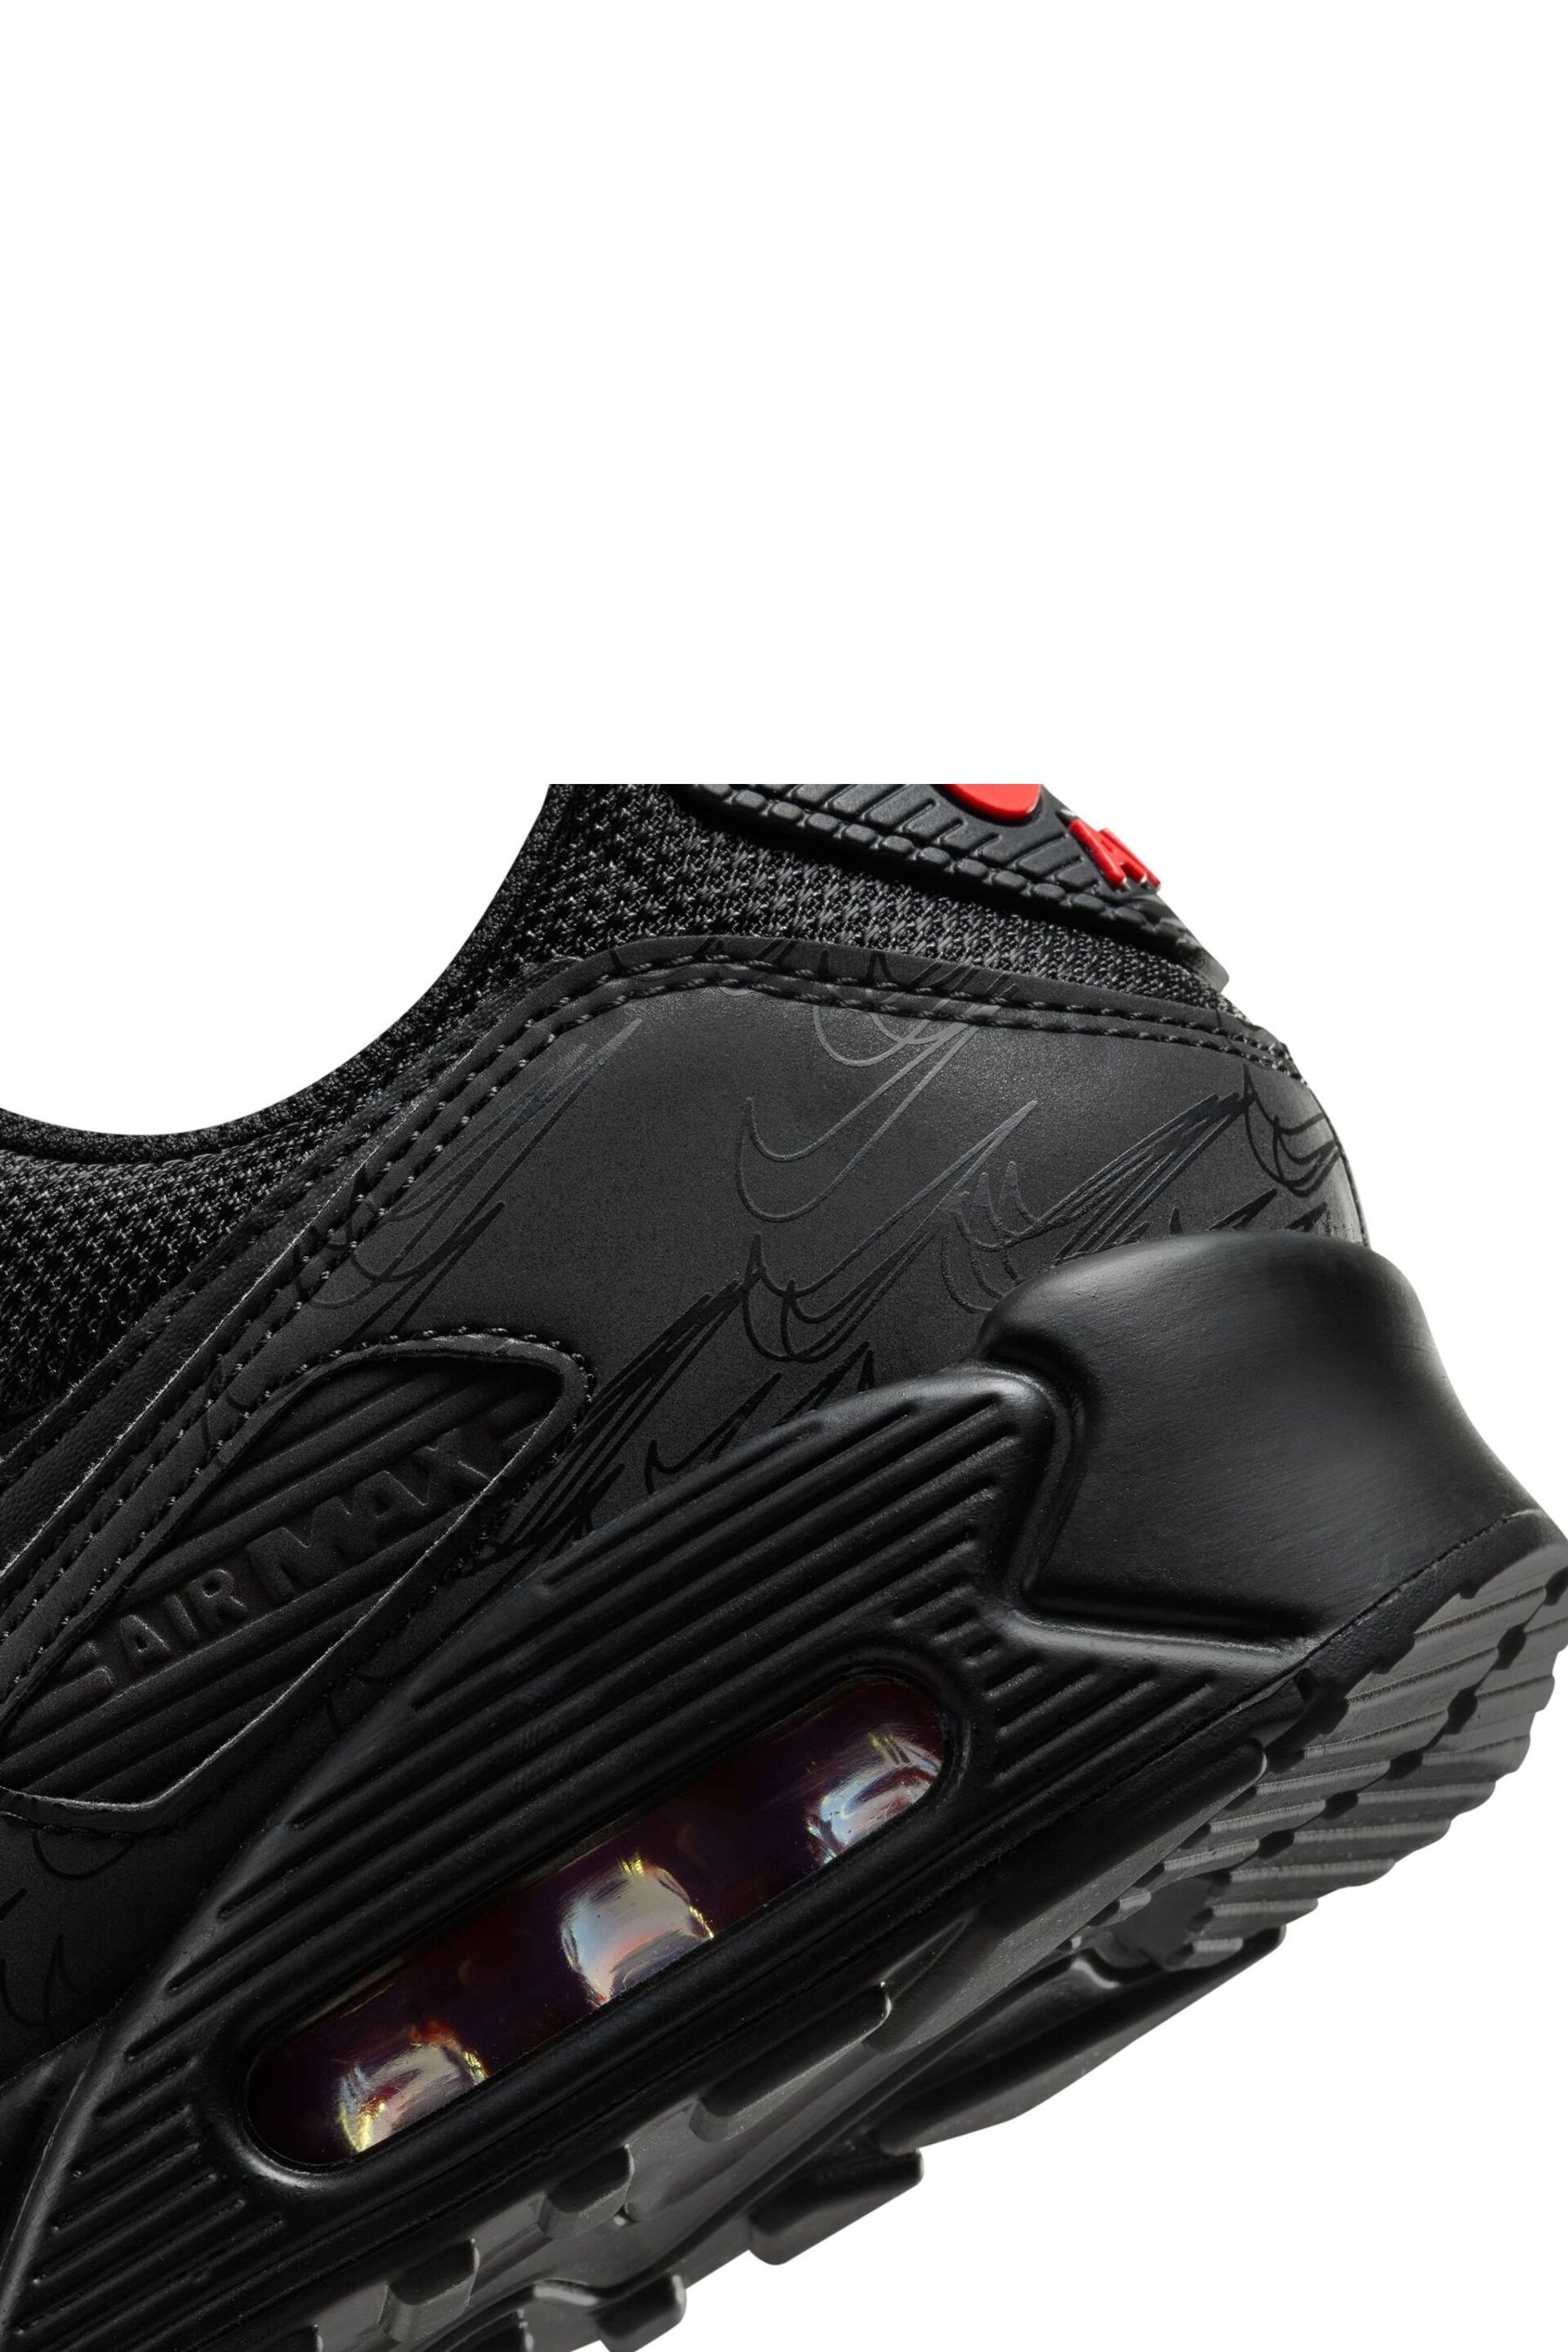 Nike Black/Grey Air Max 90 Trainers - Image 10 of 10